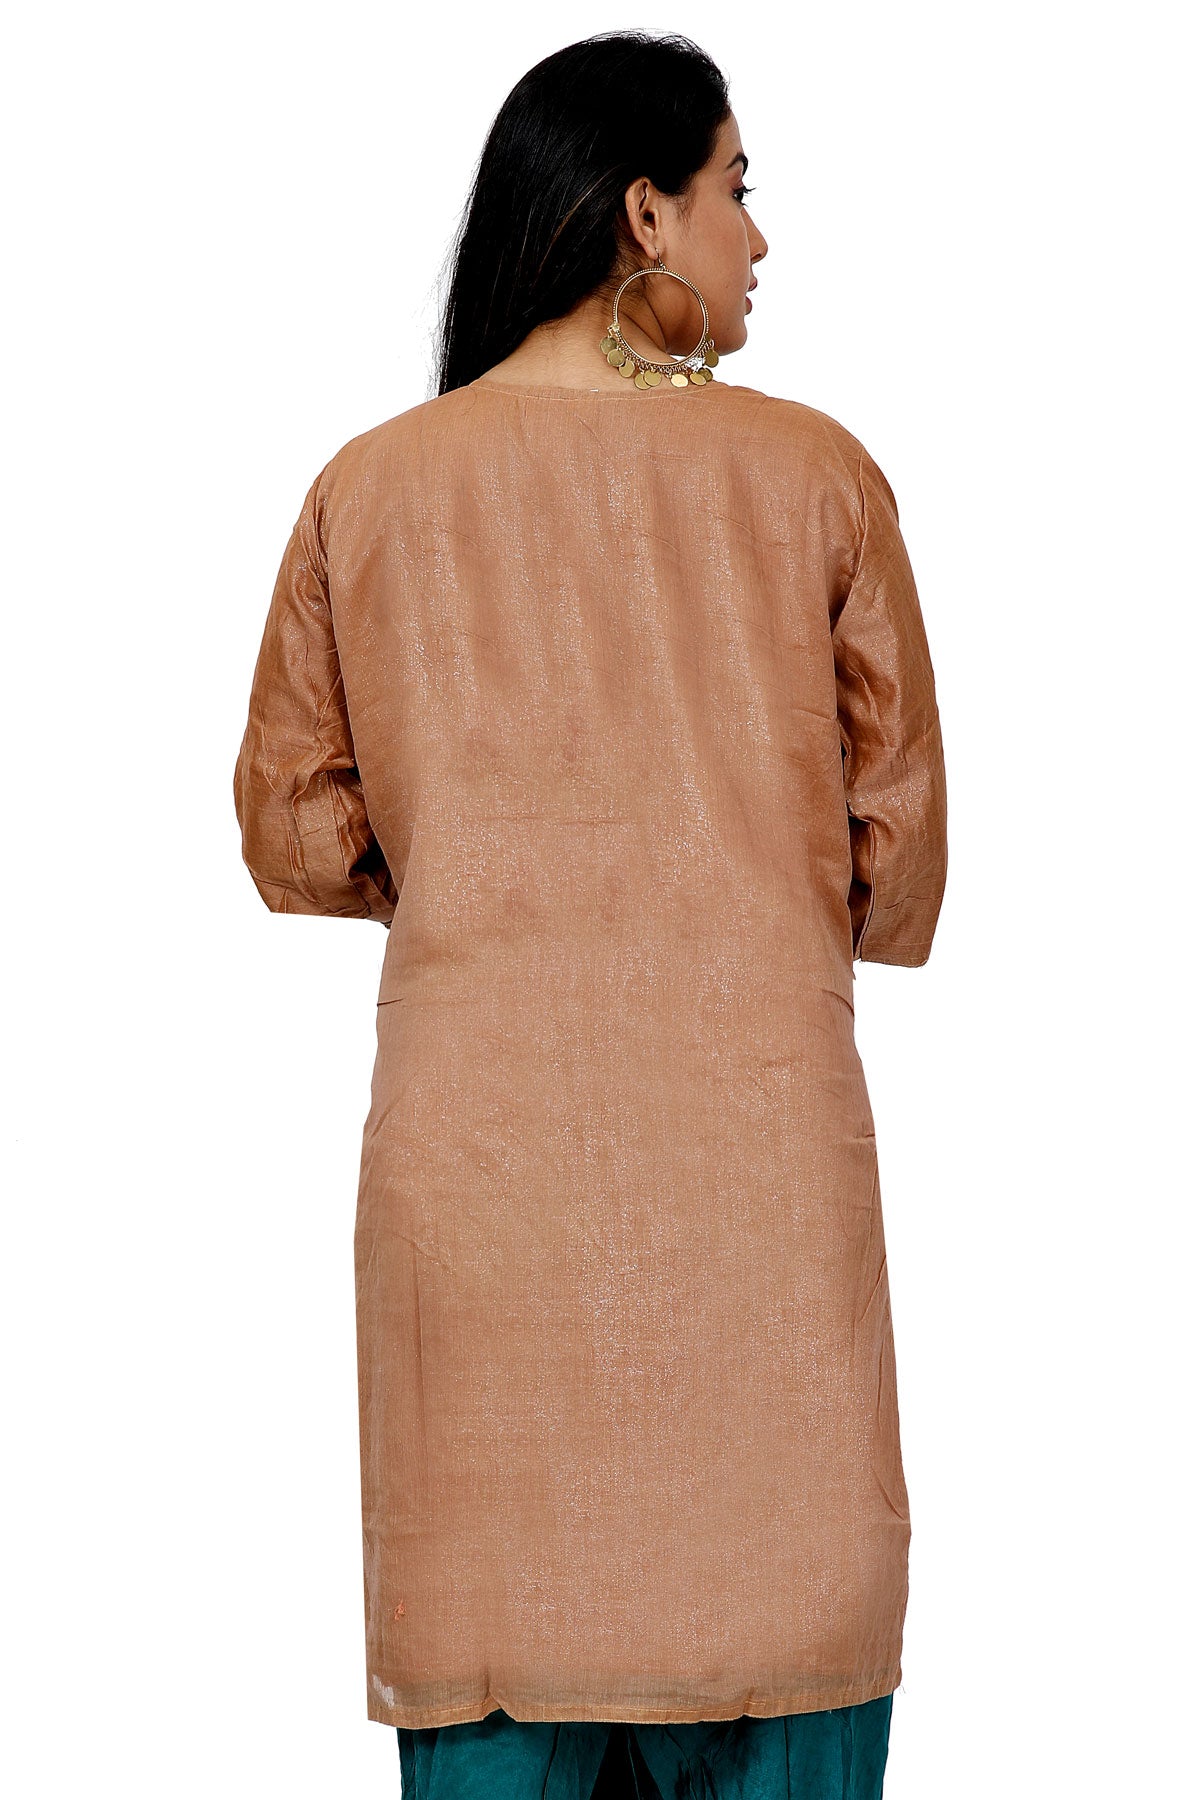 Gold silk Formal Salwar kameez Plus Size 56